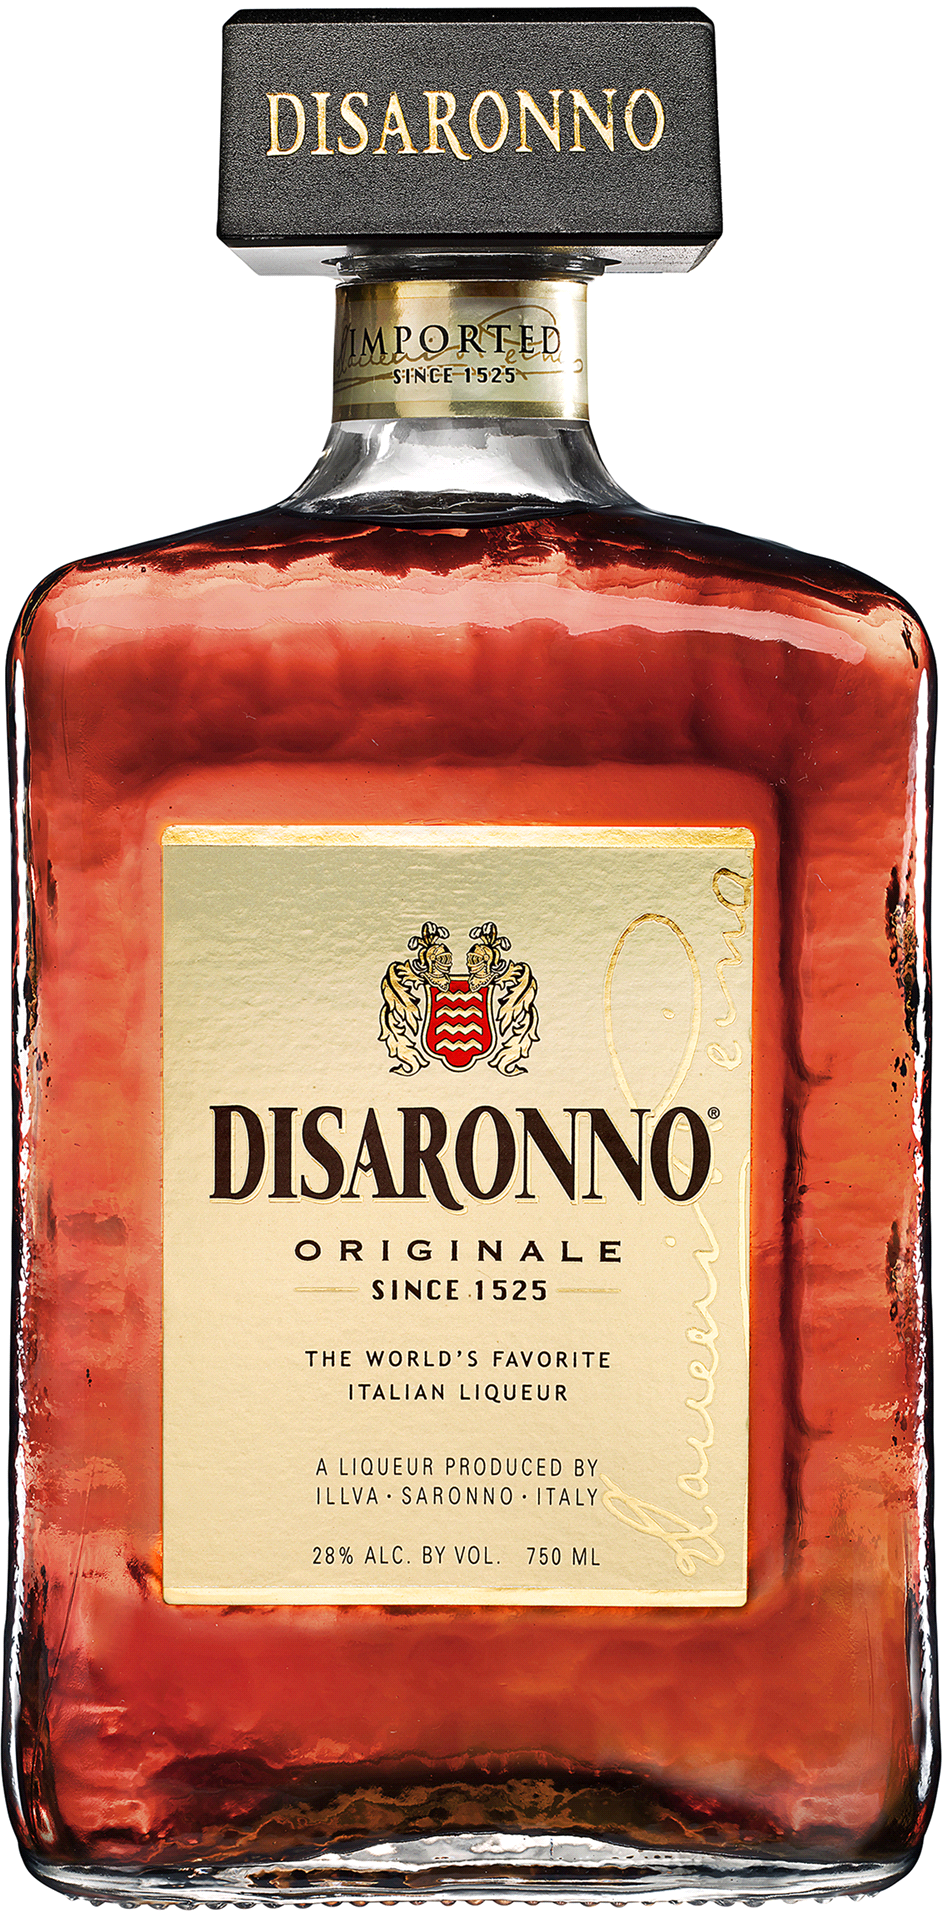 Disaronno Amaretto likőr 0,5L 28%